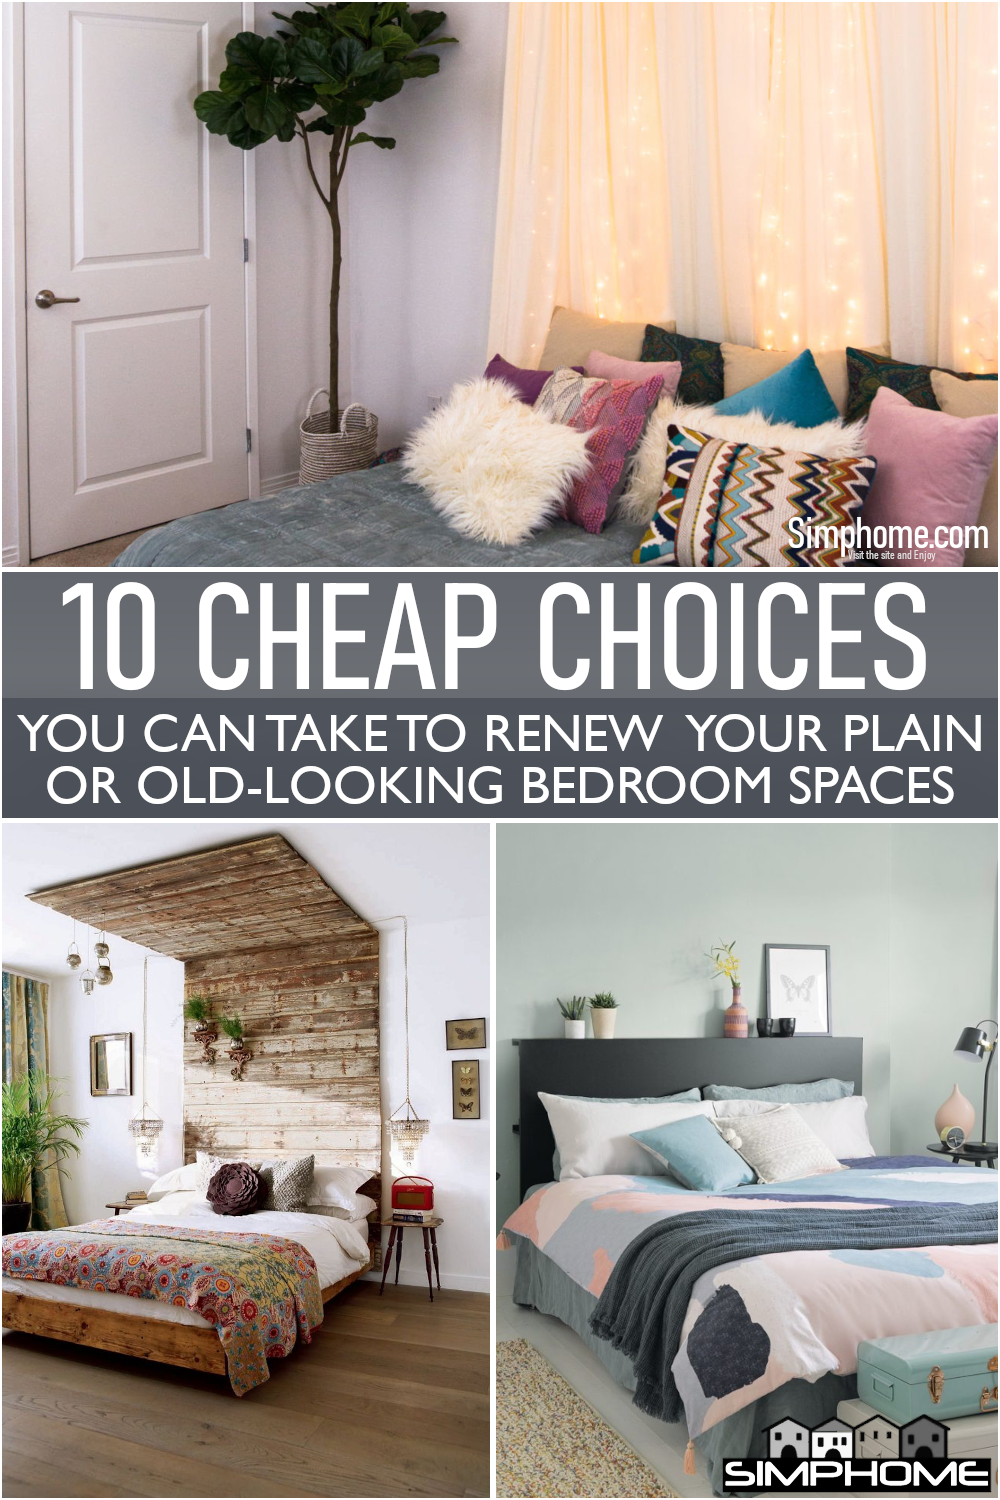 Get this 10 Inexpensive Alternative Ideas to Renew a Bedroom via Simphome.com